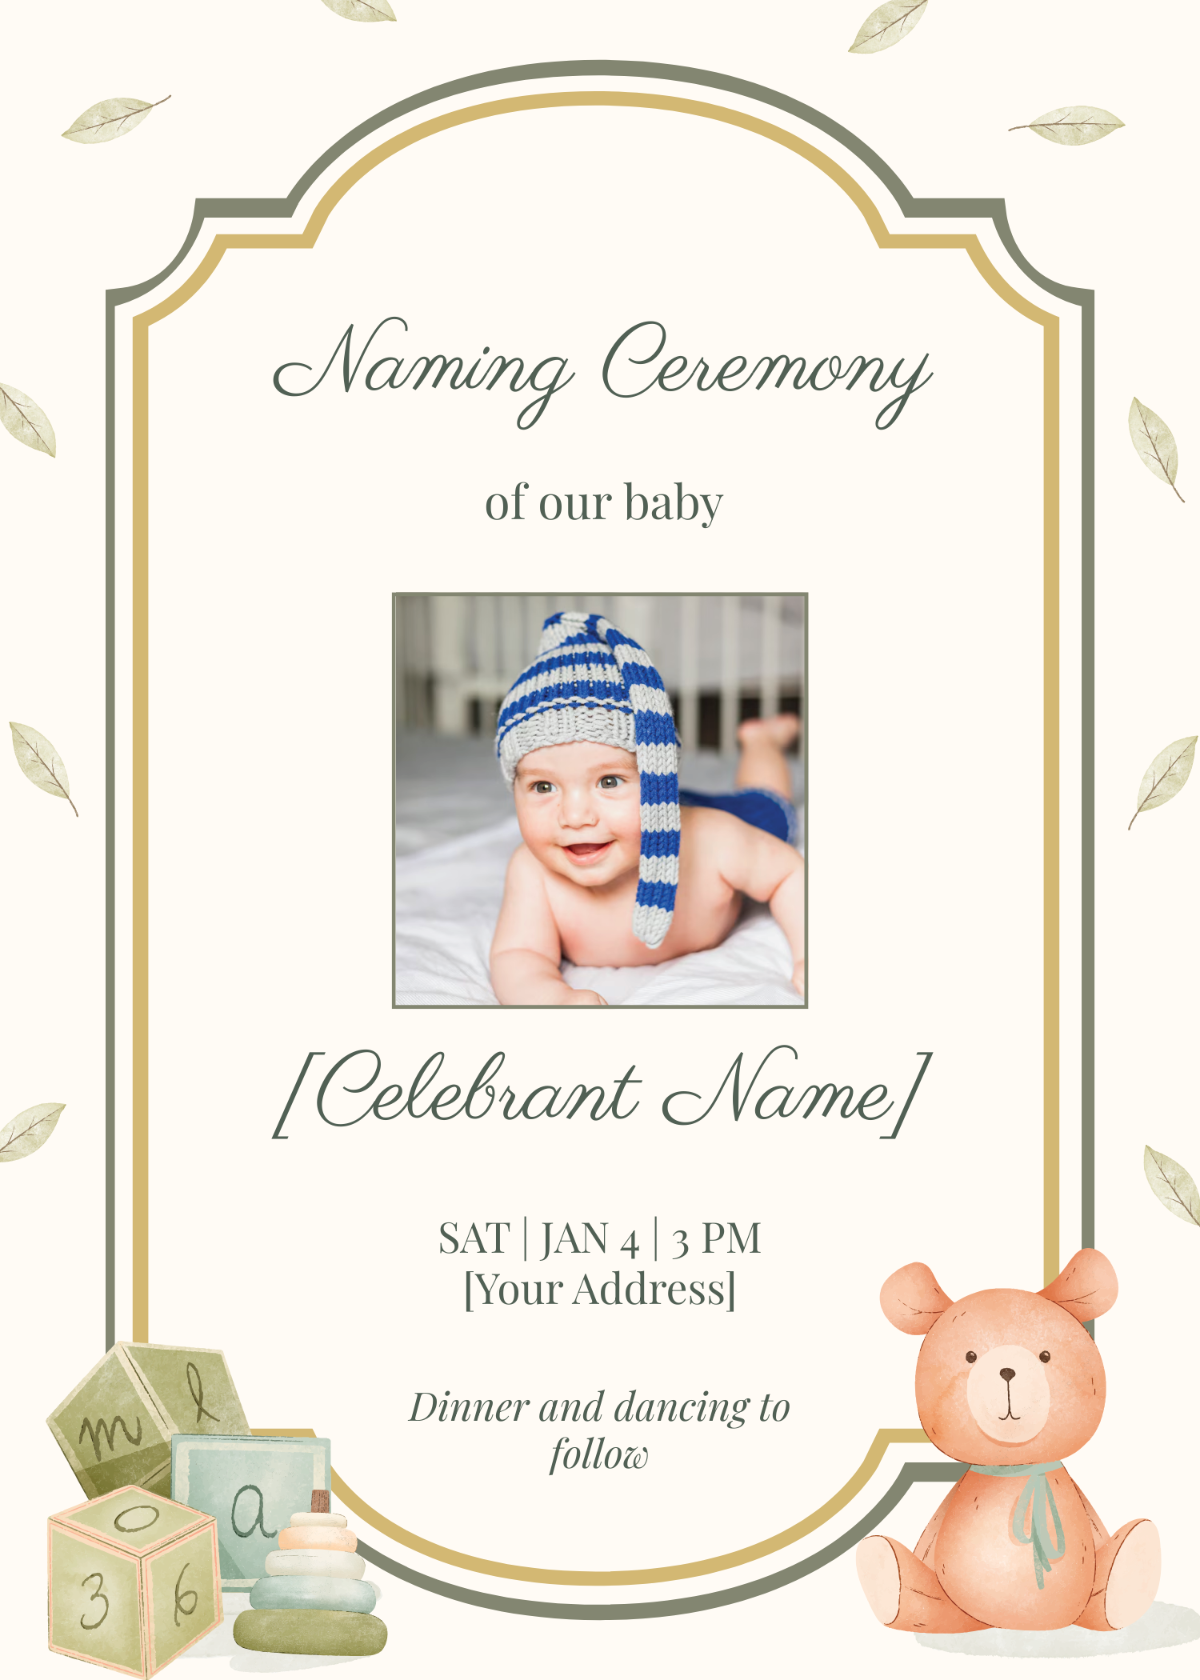 Traditional Naming Ceremony Invitation